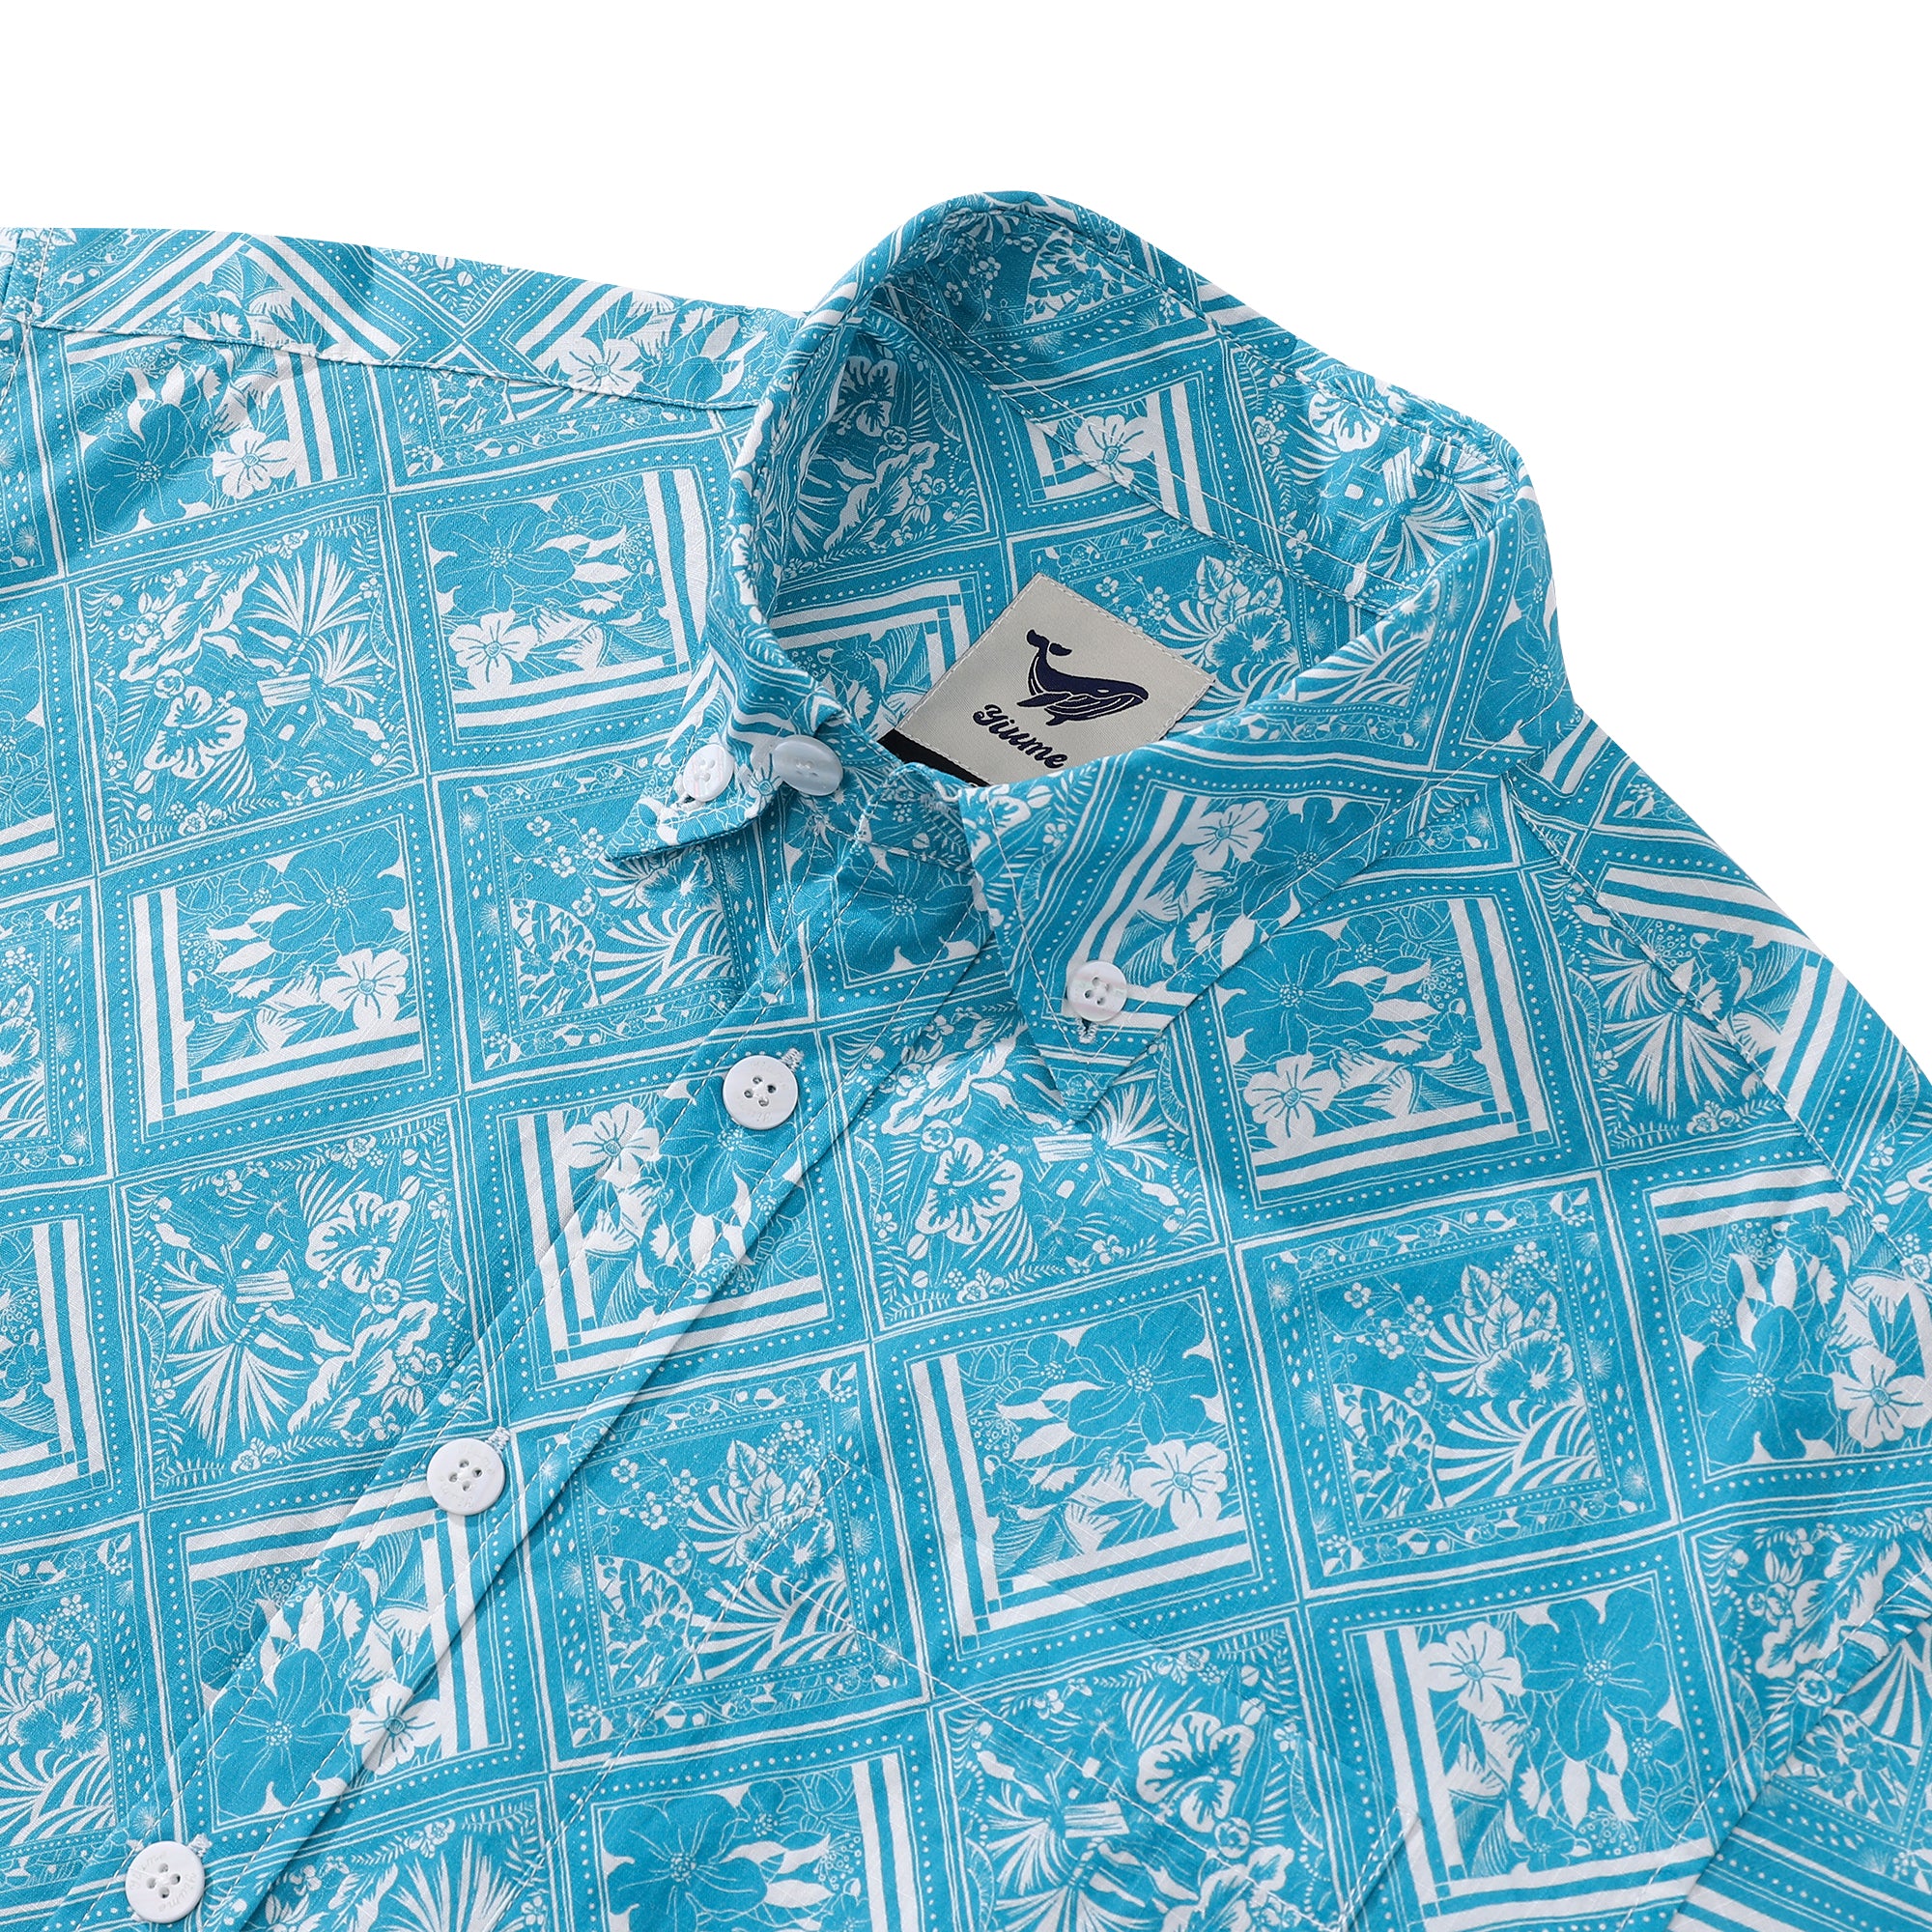 Men's Hawaiian Shirt Silk Scarf Collage Print Cotton Button-down Short Sleeve Aloha Shirt